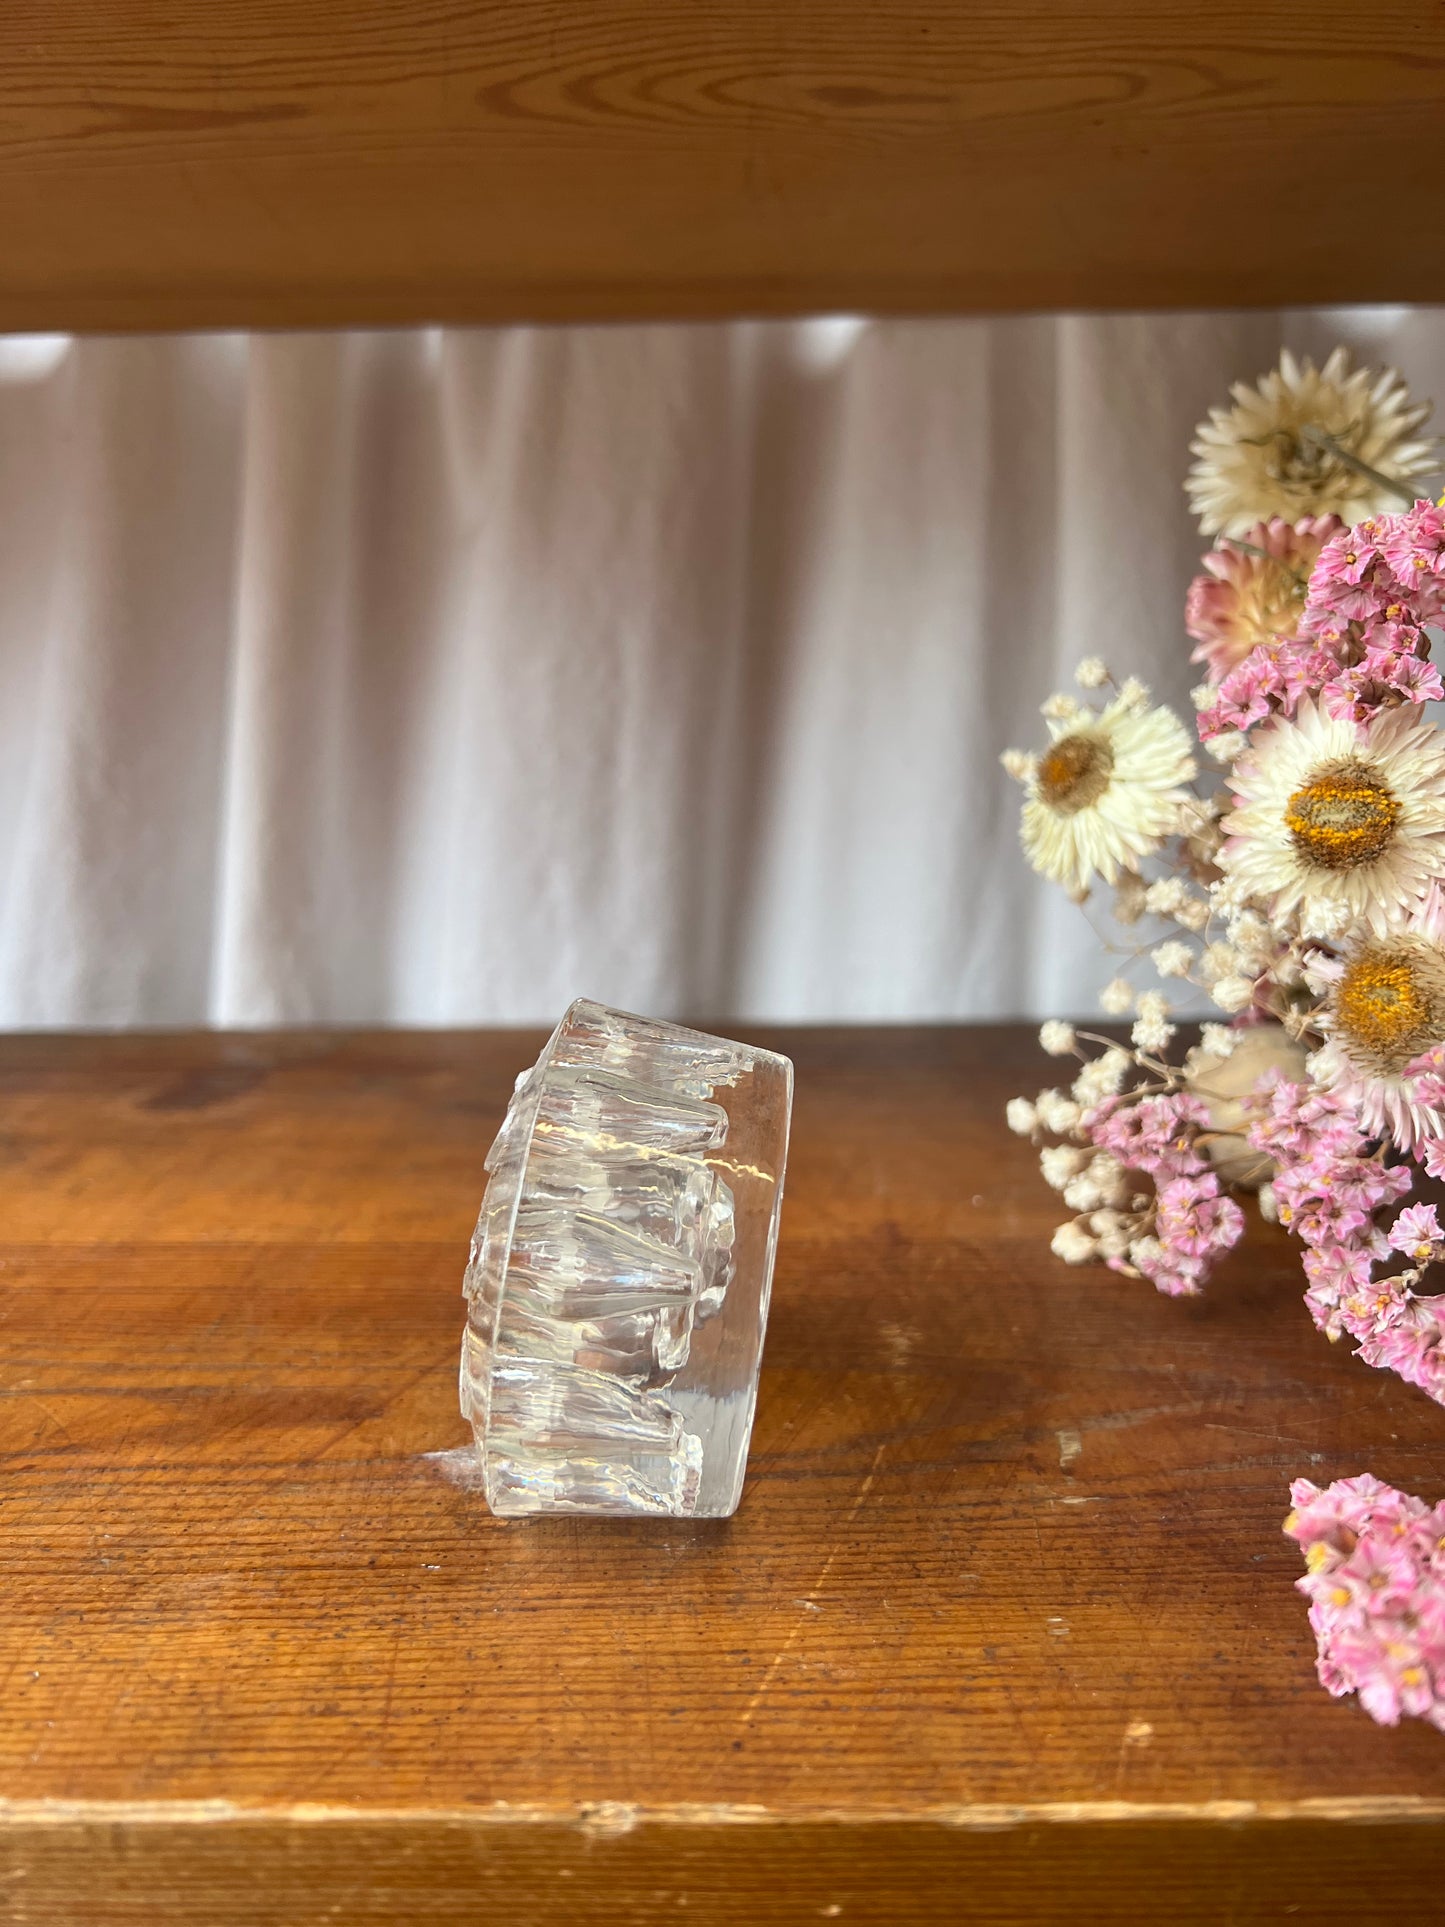 Blomsterfakir i klarglas